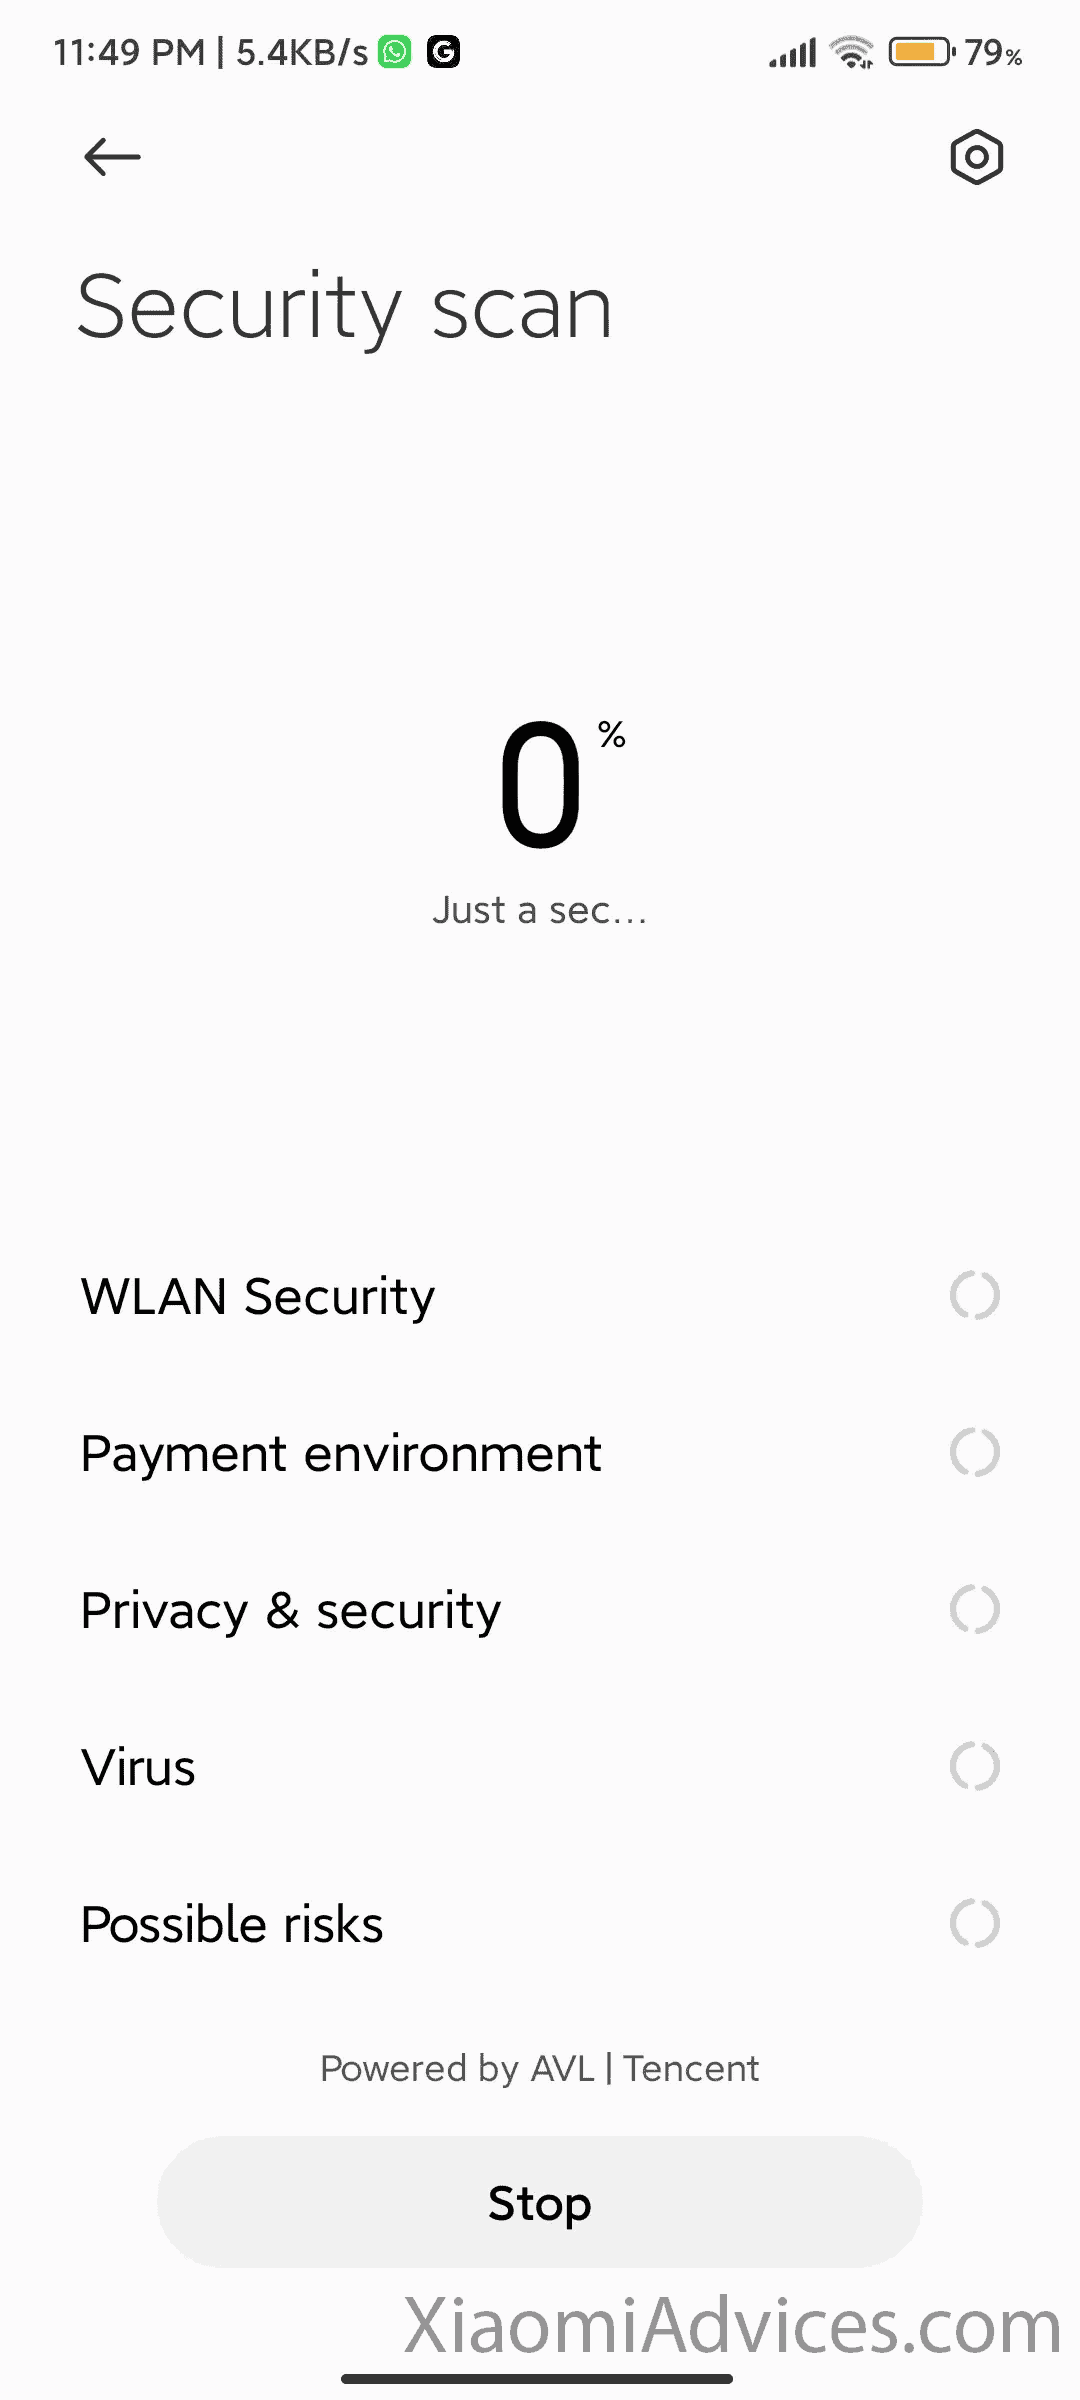 MIUI Security App Security Scan